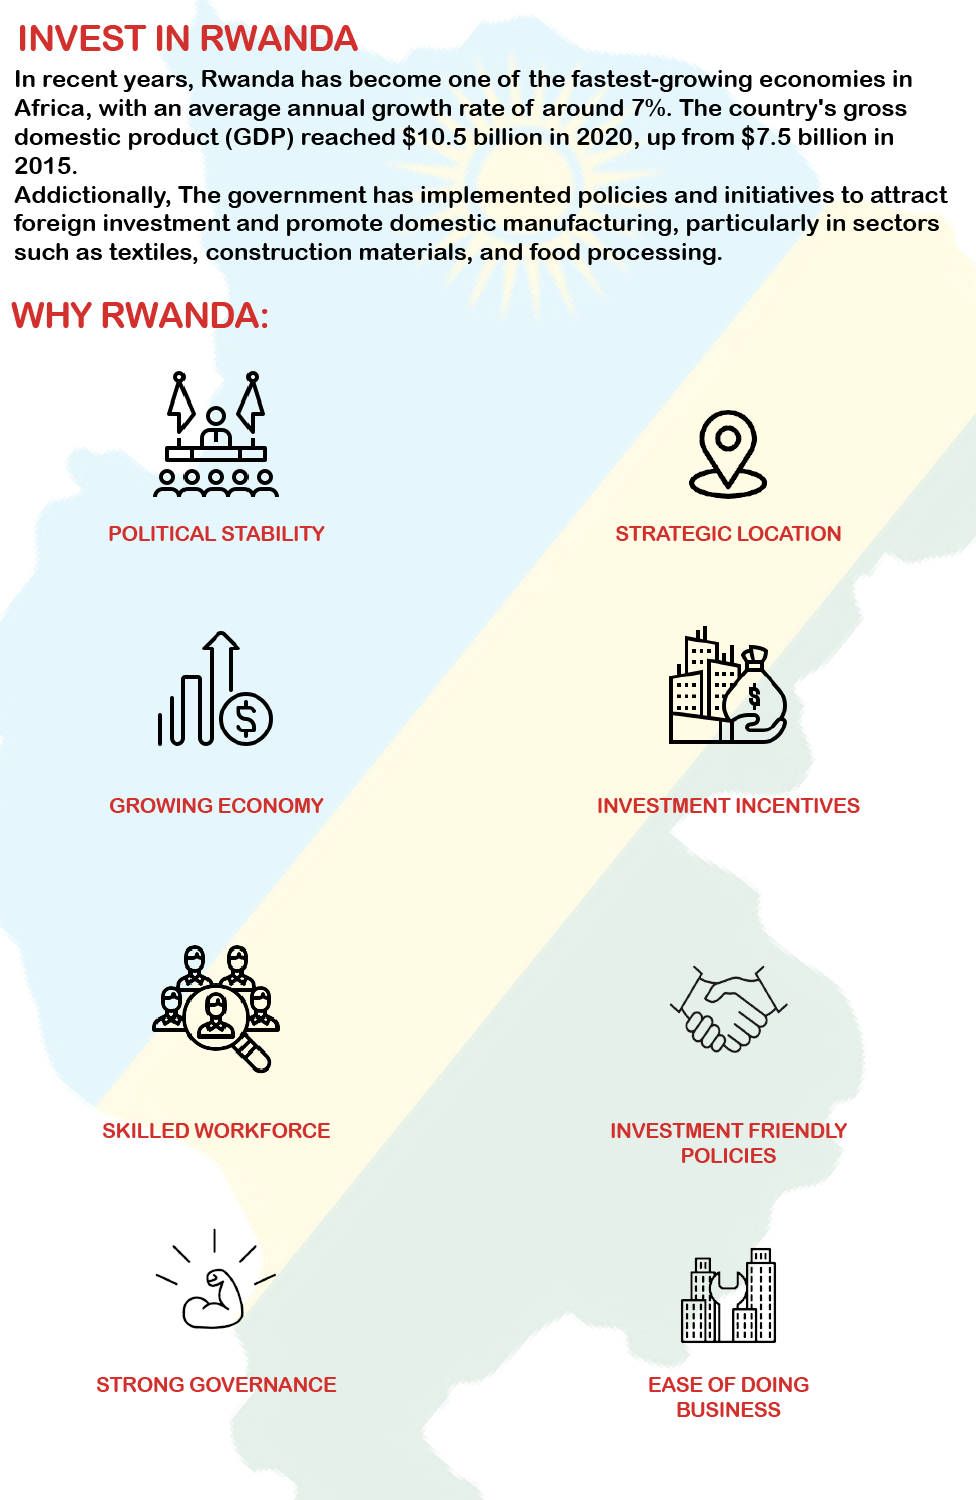 Start a Business in Rwanda - Starting a business in Rwanda as a foreigner